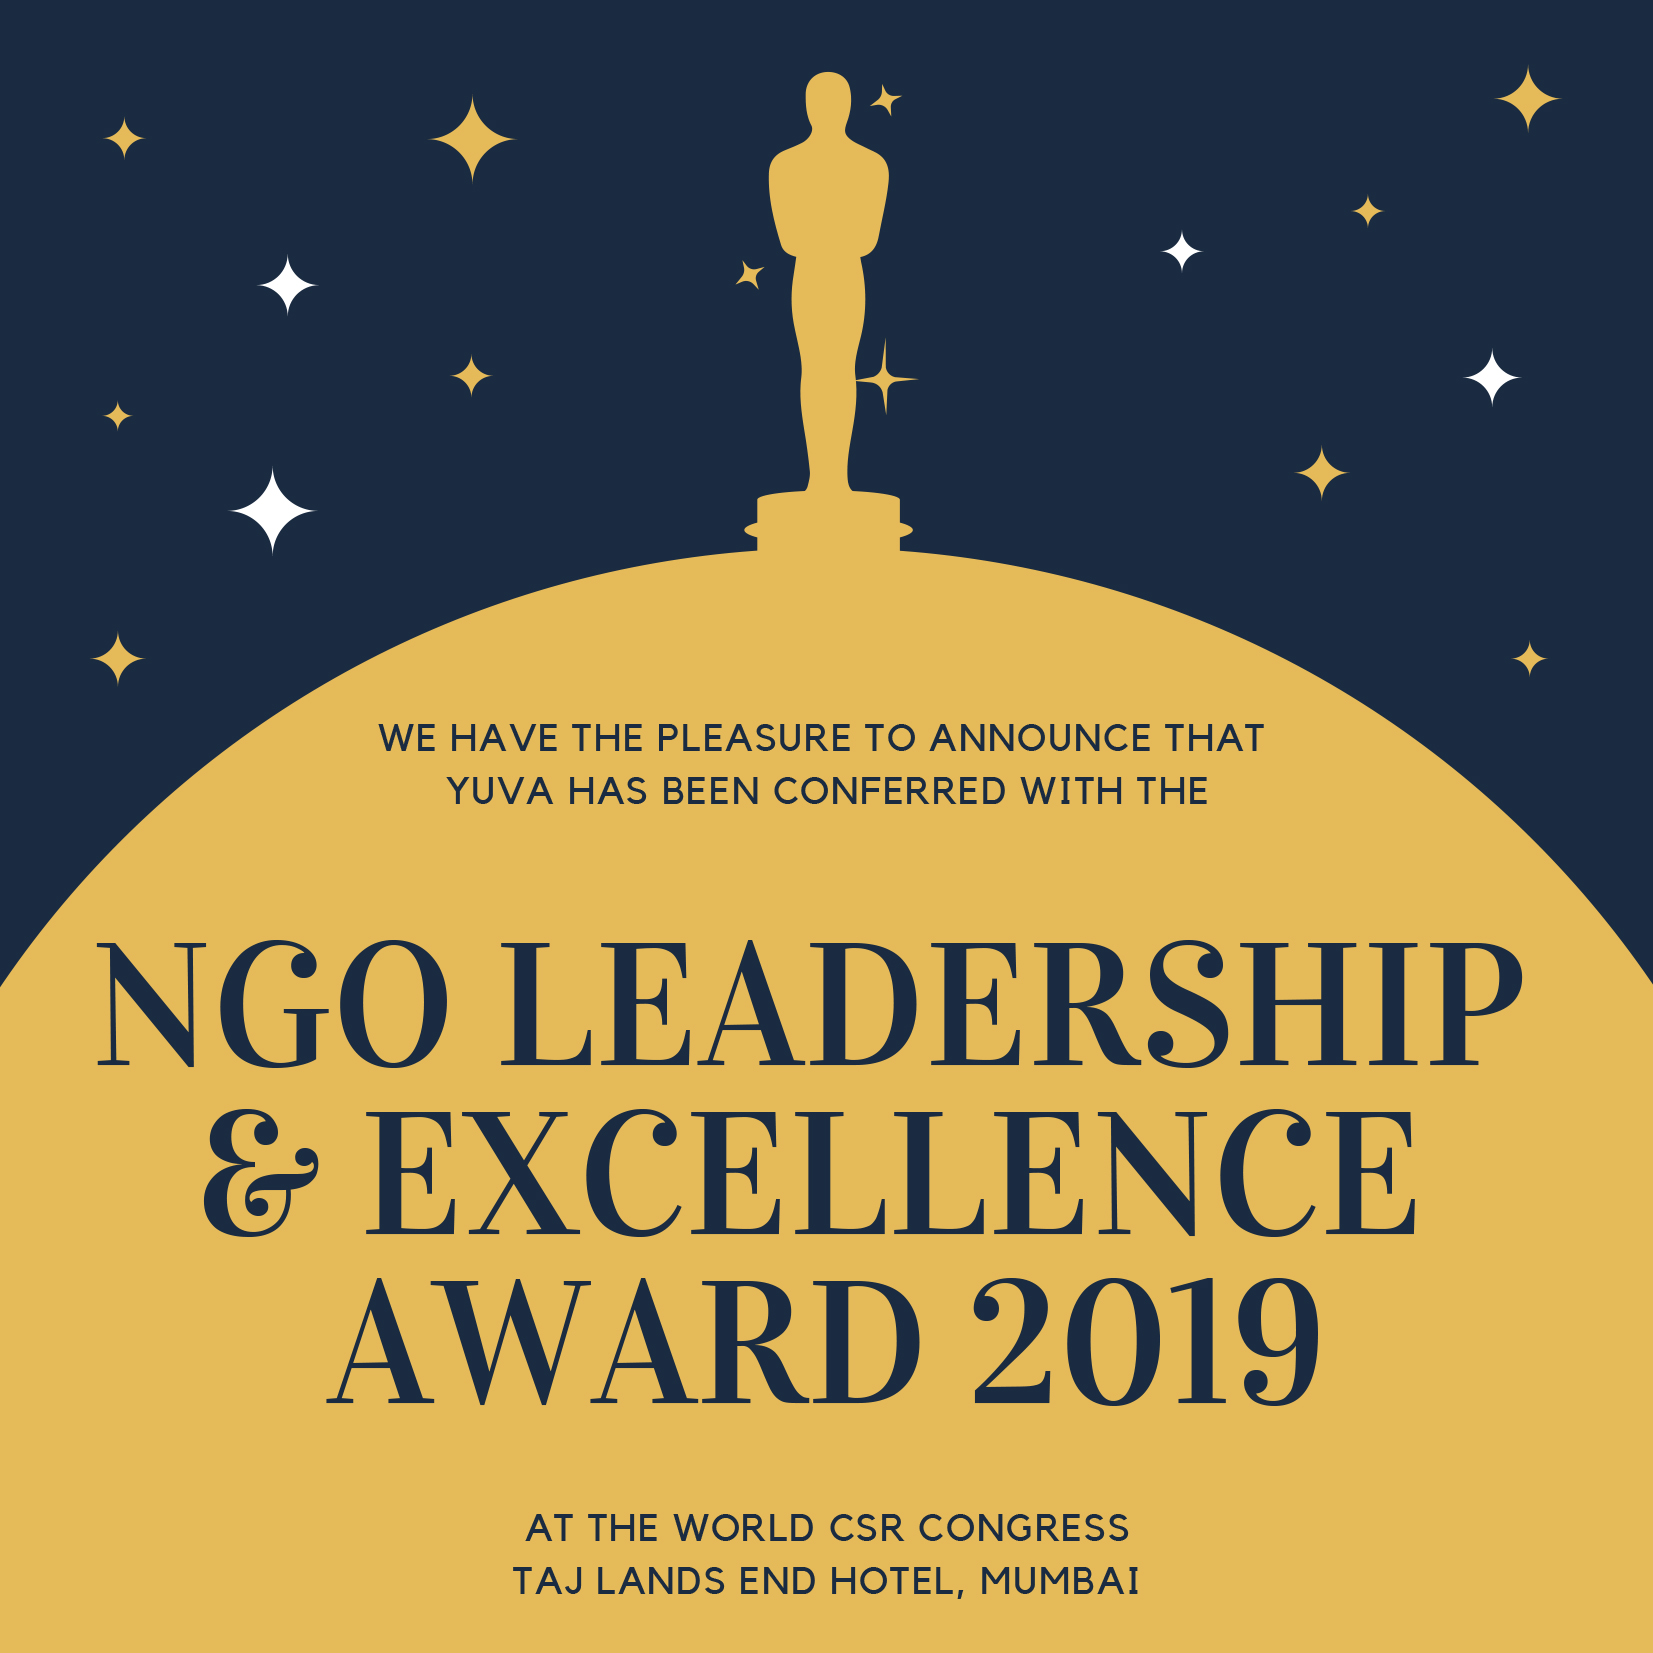 YUVA wins the ‘NGO Leadership & Excellence Award 2019’ at the World CSR Congress